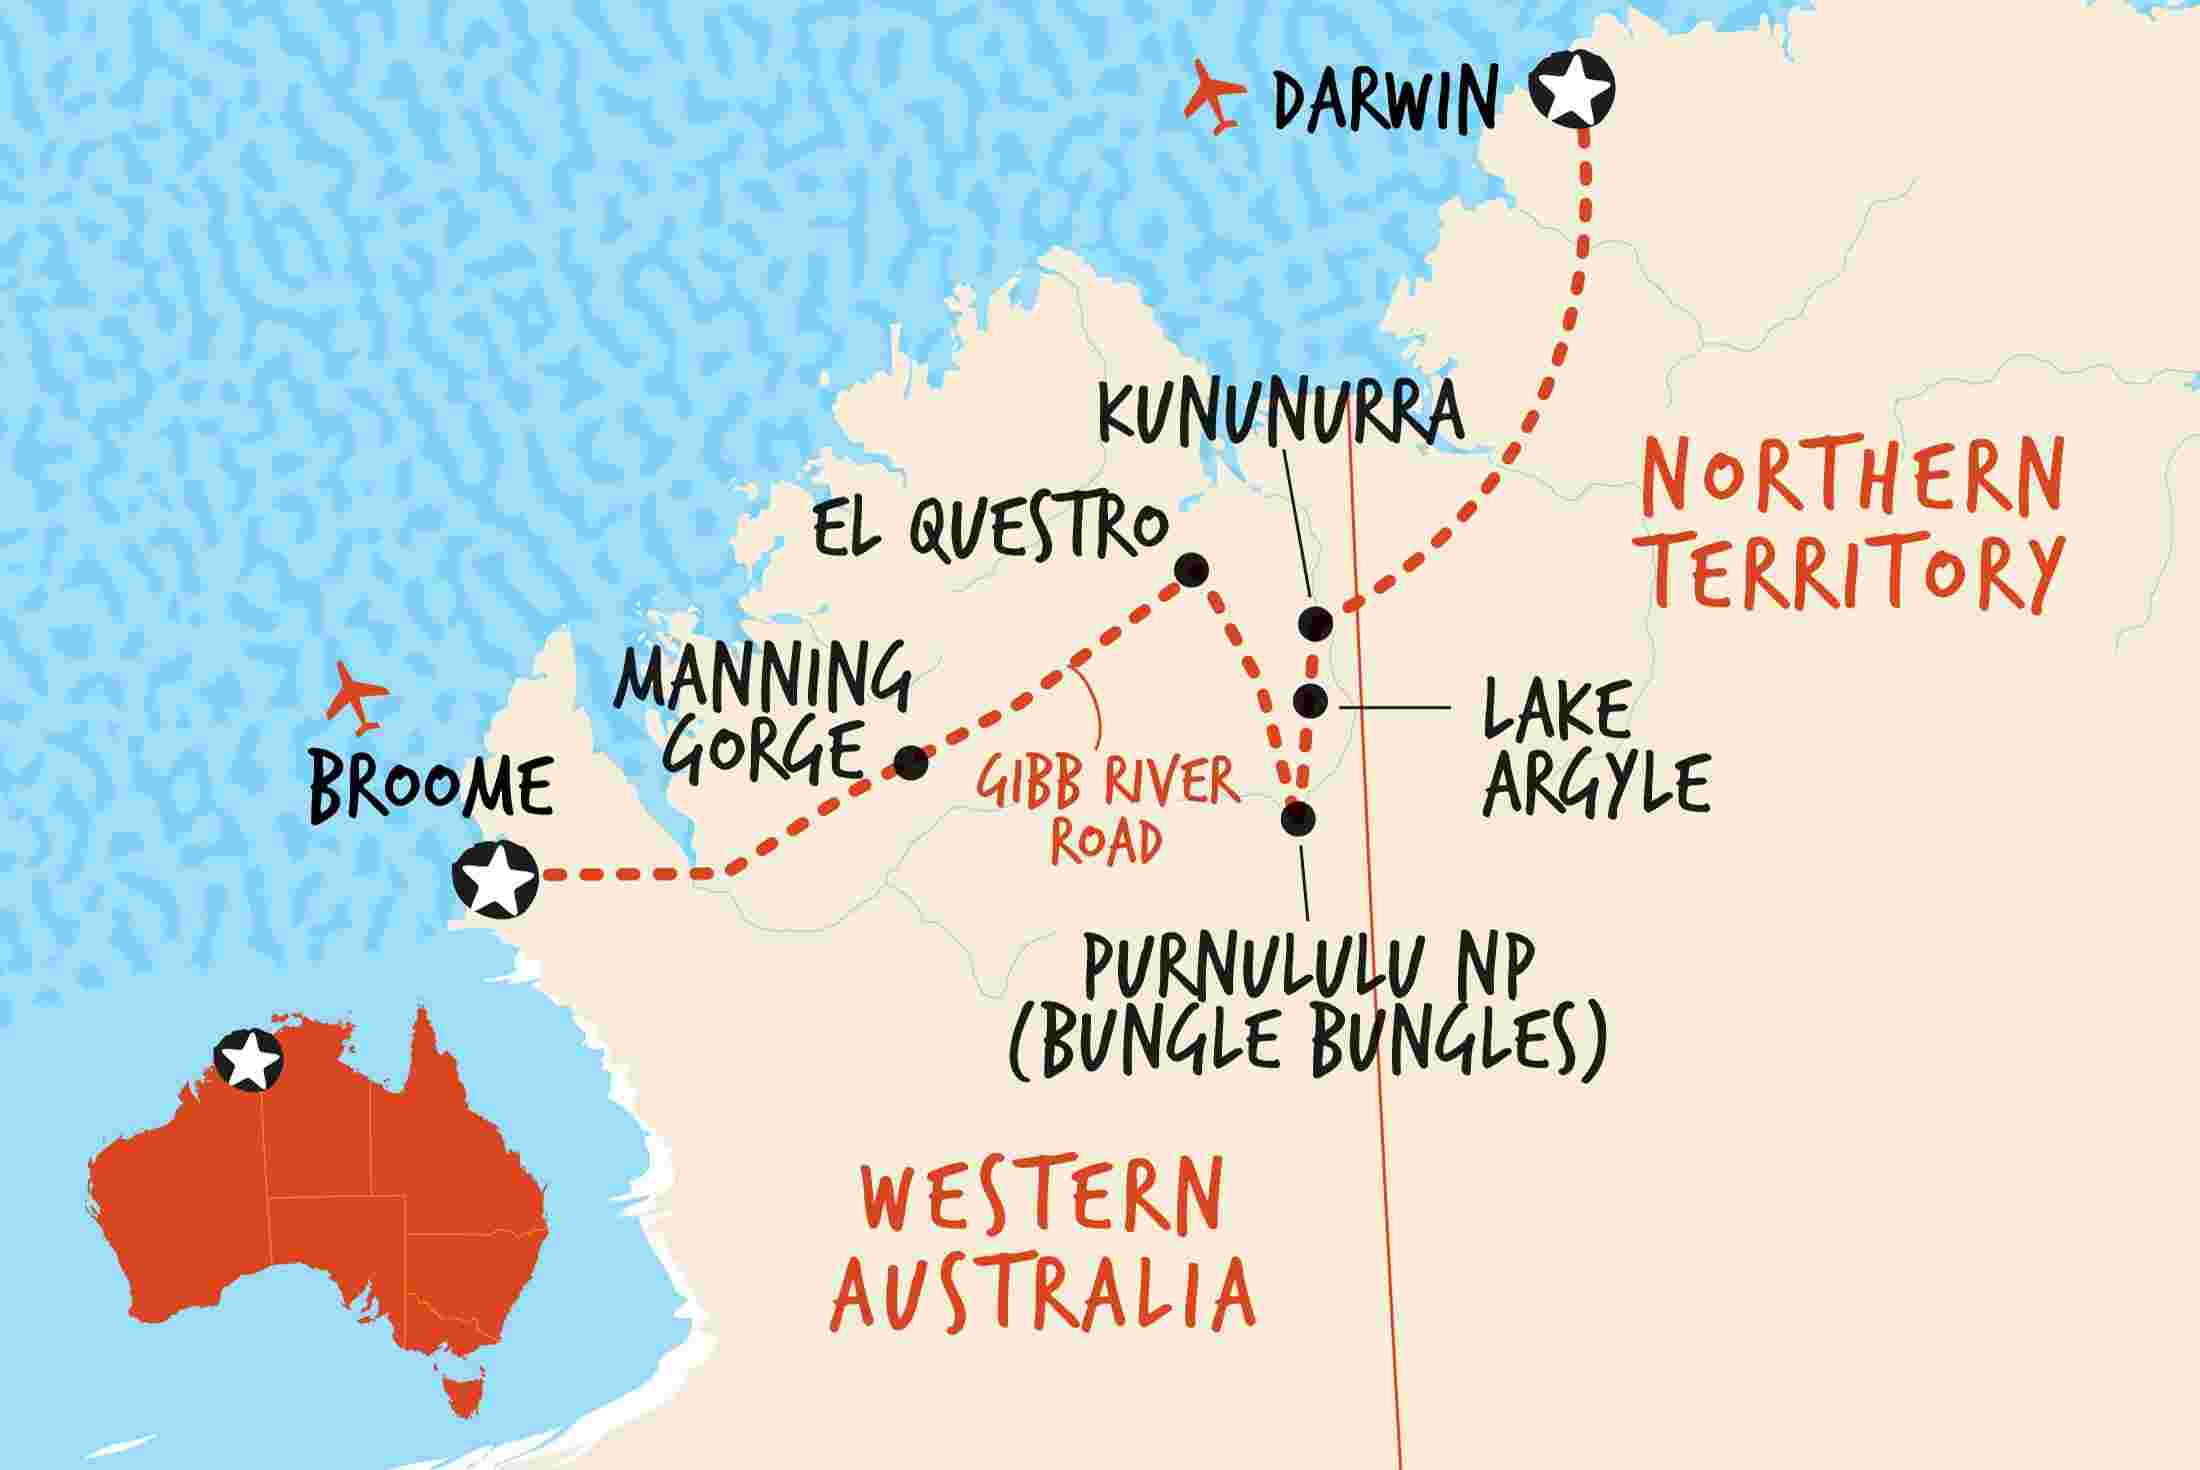 Reisschema Broome - Darwin